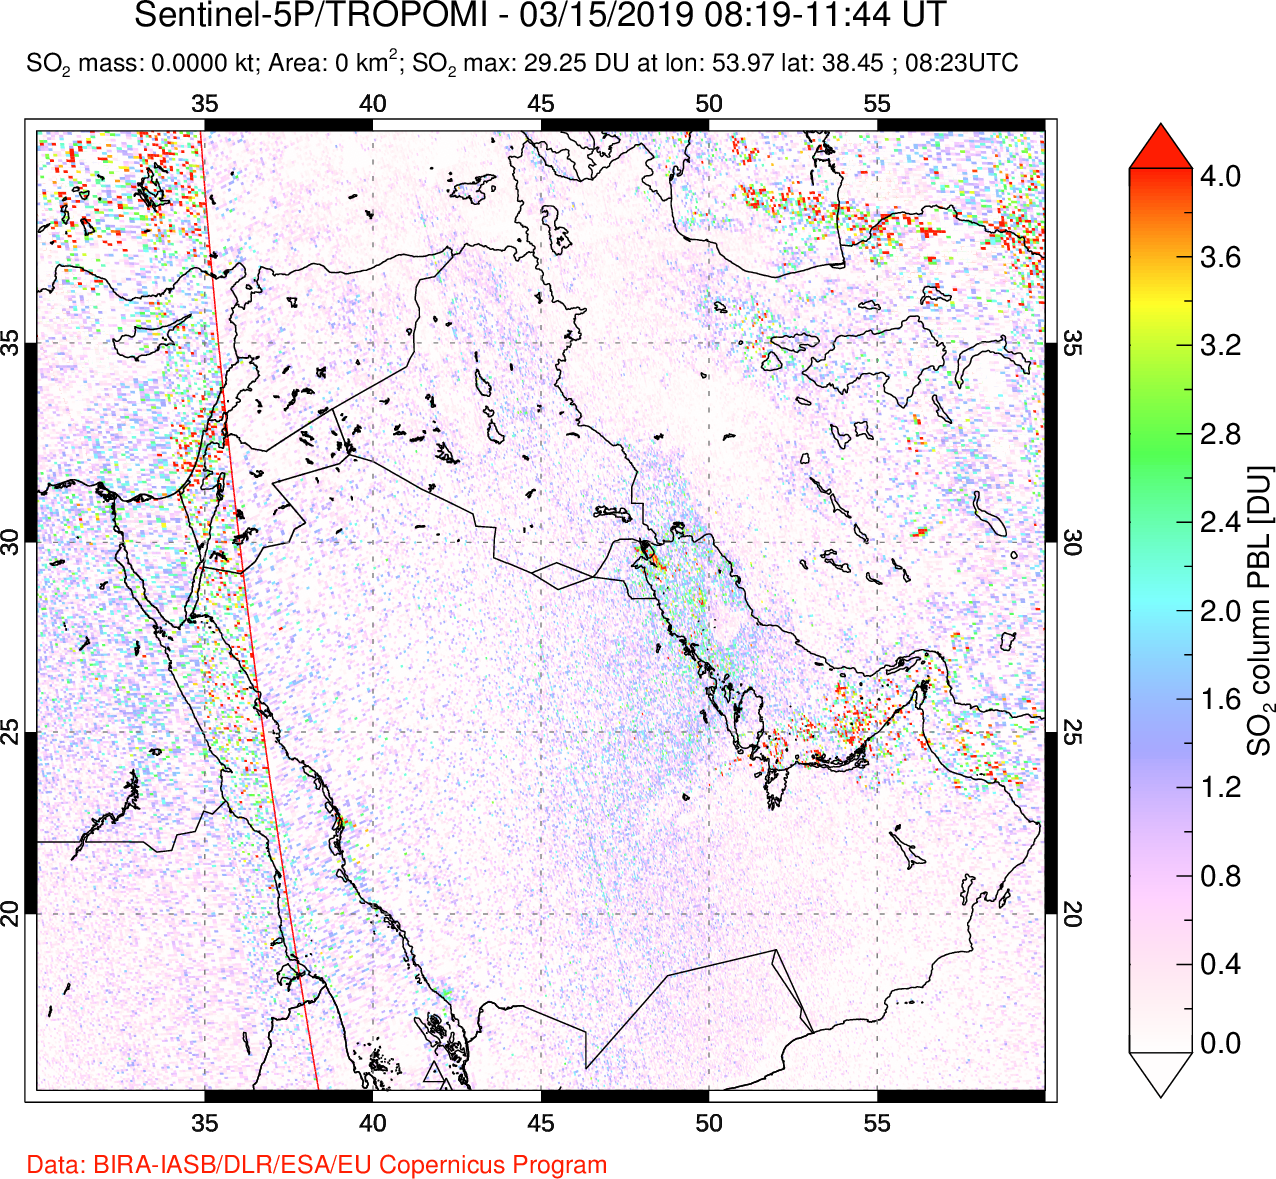 A sulfur dioxide image over Middle East on Mar 15, 2019.